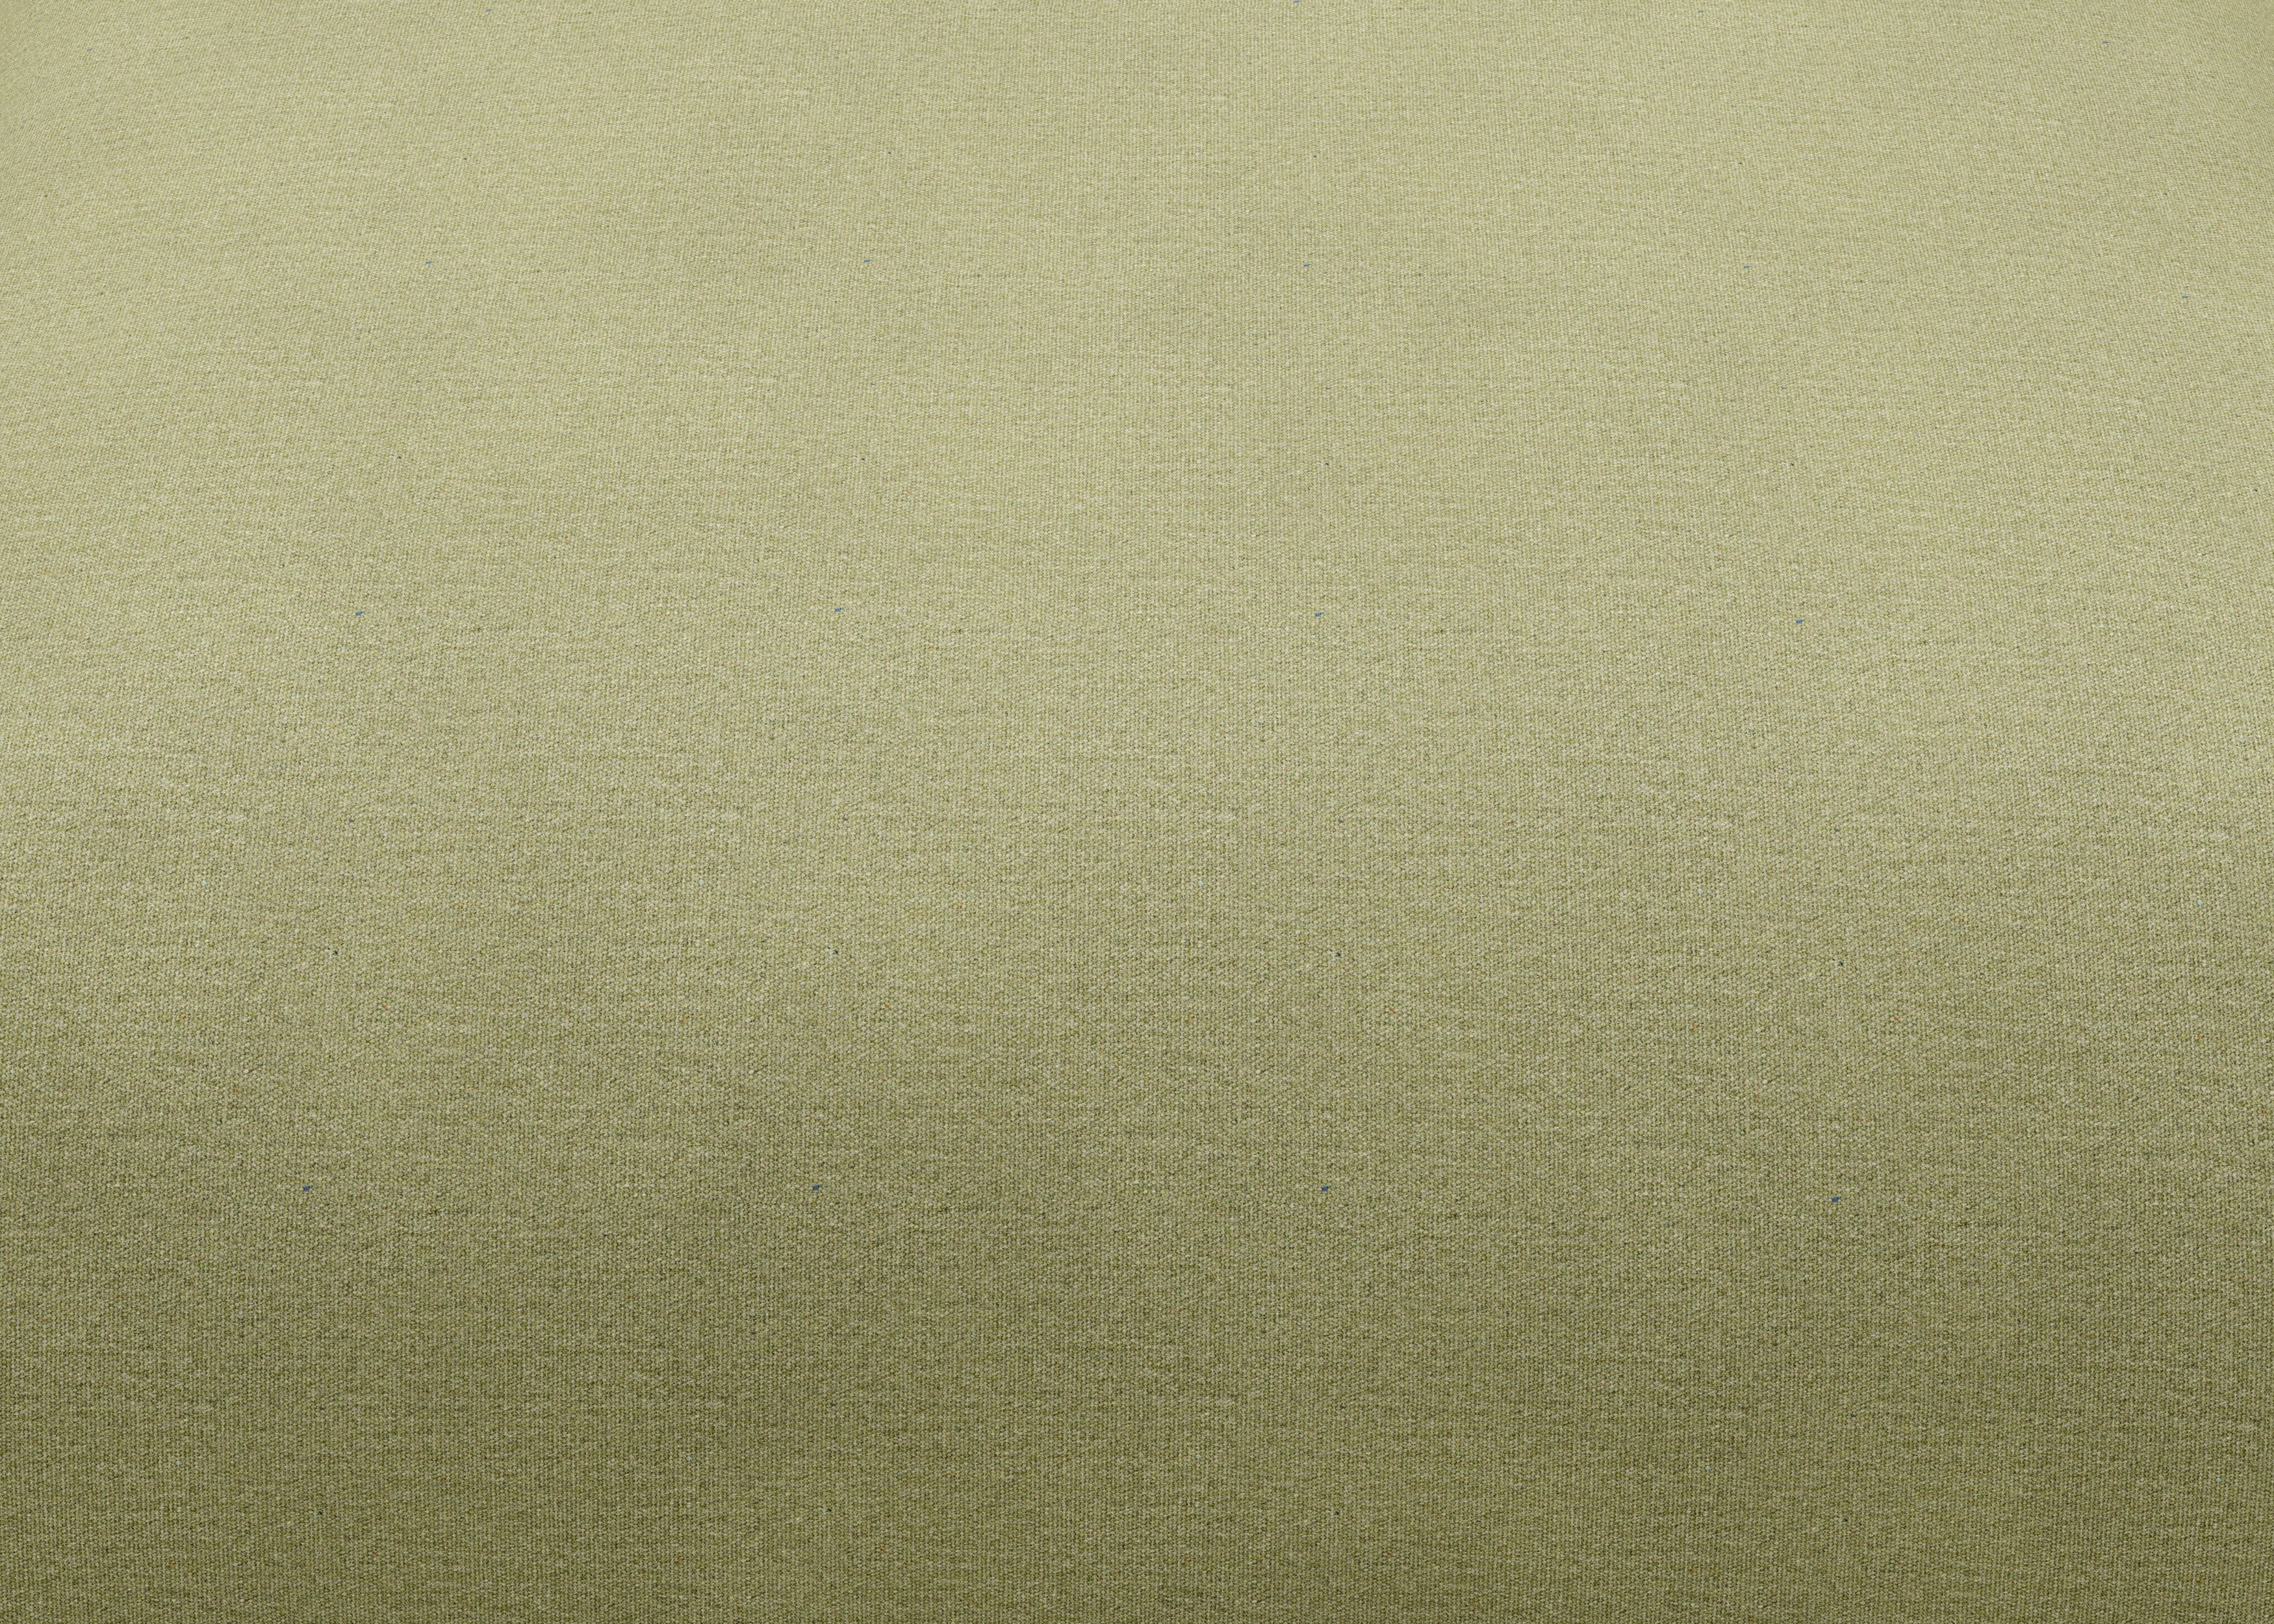 vetsak®-Two Seat Sofa M Linen olive